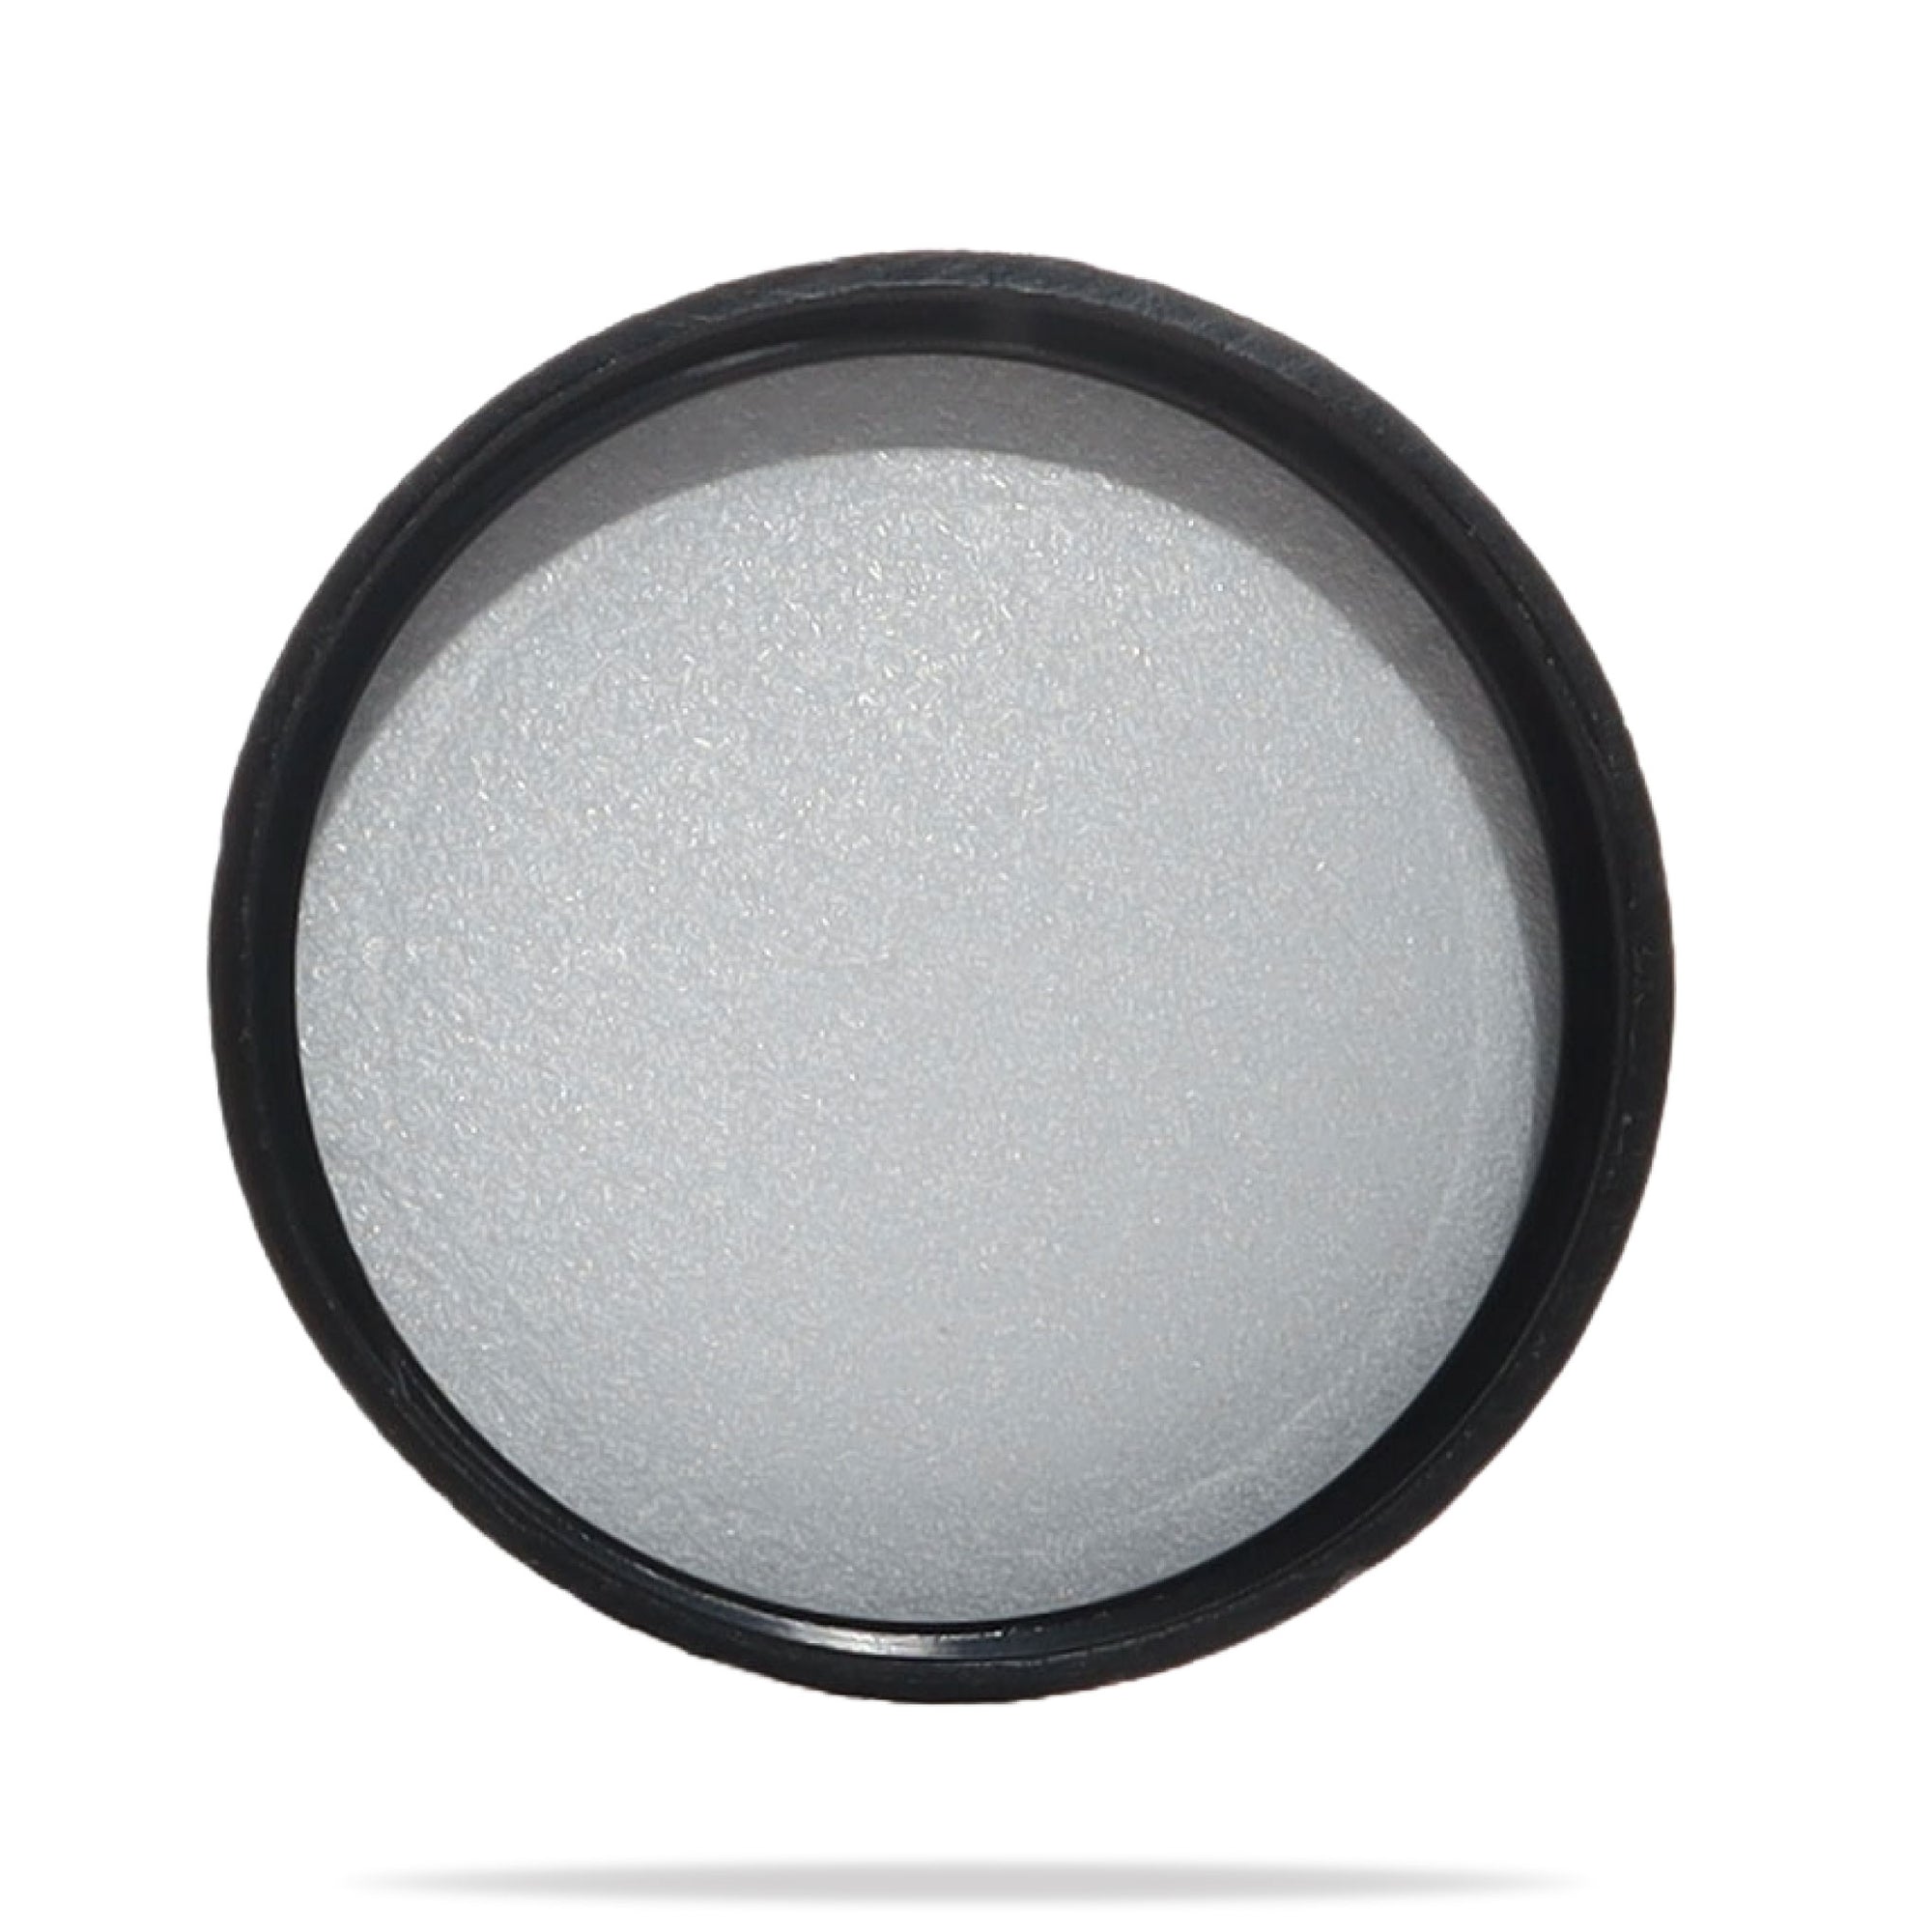 Image of a black plastic lid with pressure sensitive foam liner.